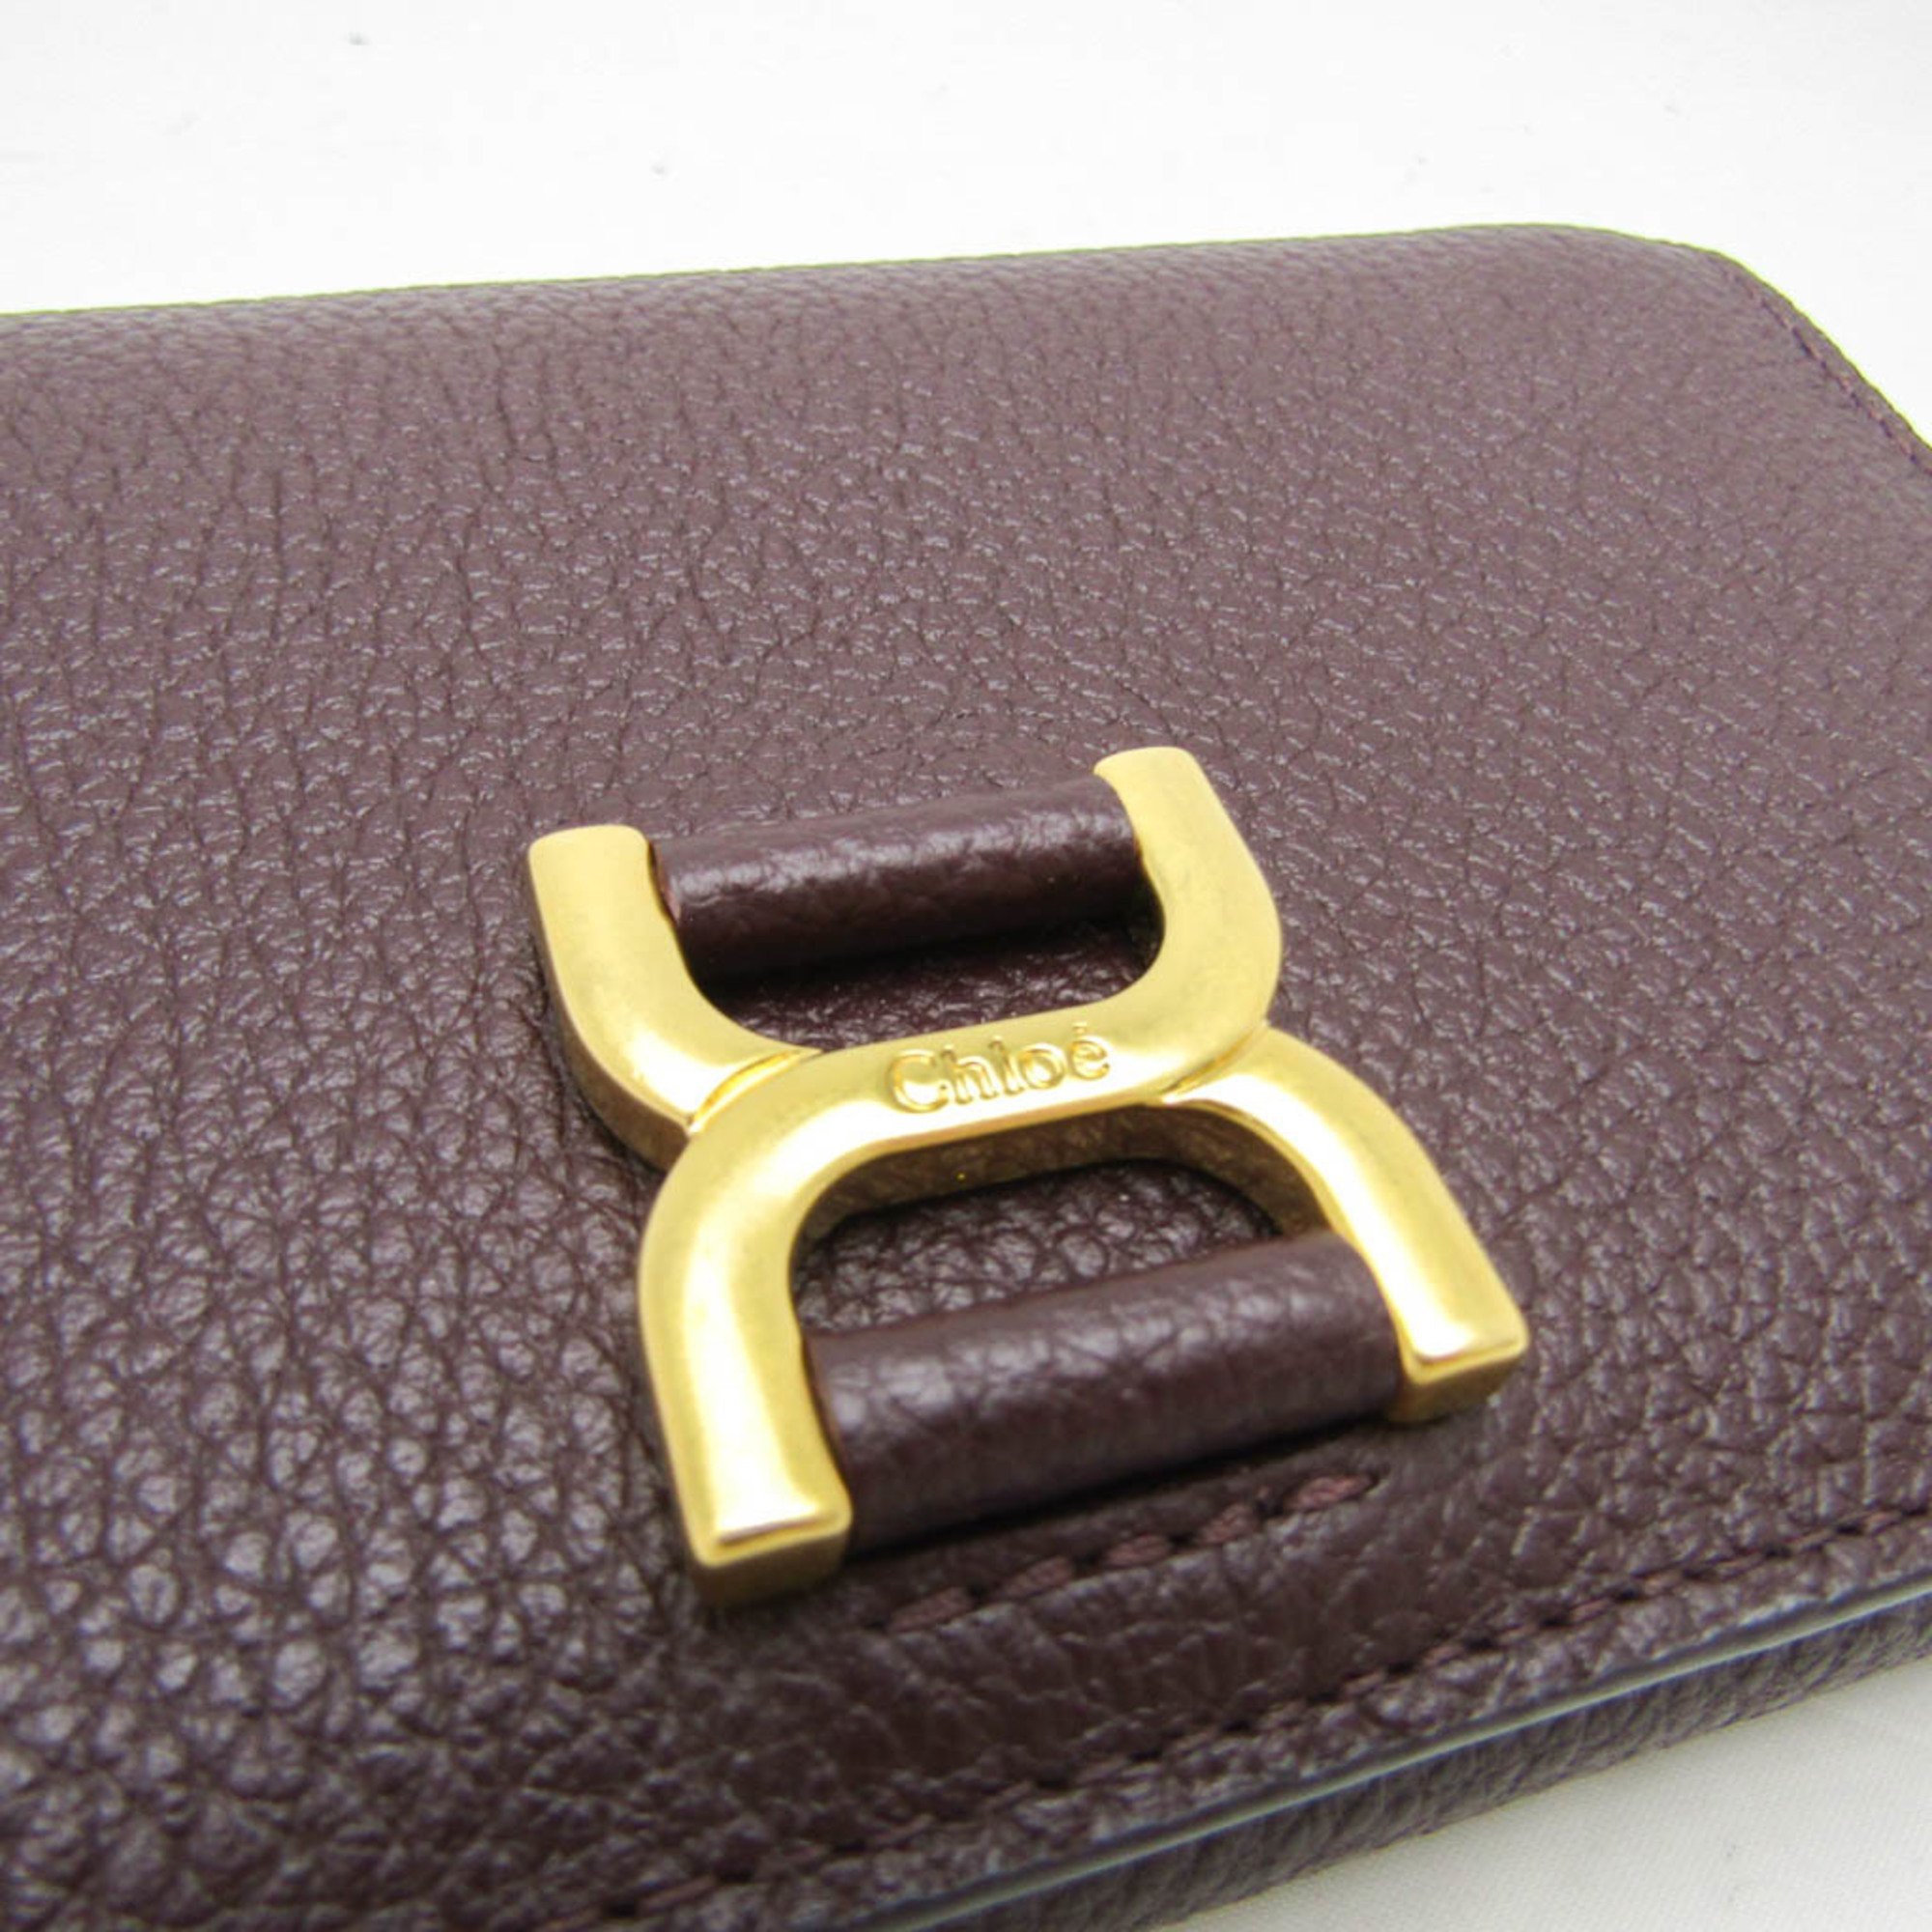 Chloé Marcie CHC23AP097I31 Women's Leather Middle Wallet (tri-fold) Bordeaux Brown